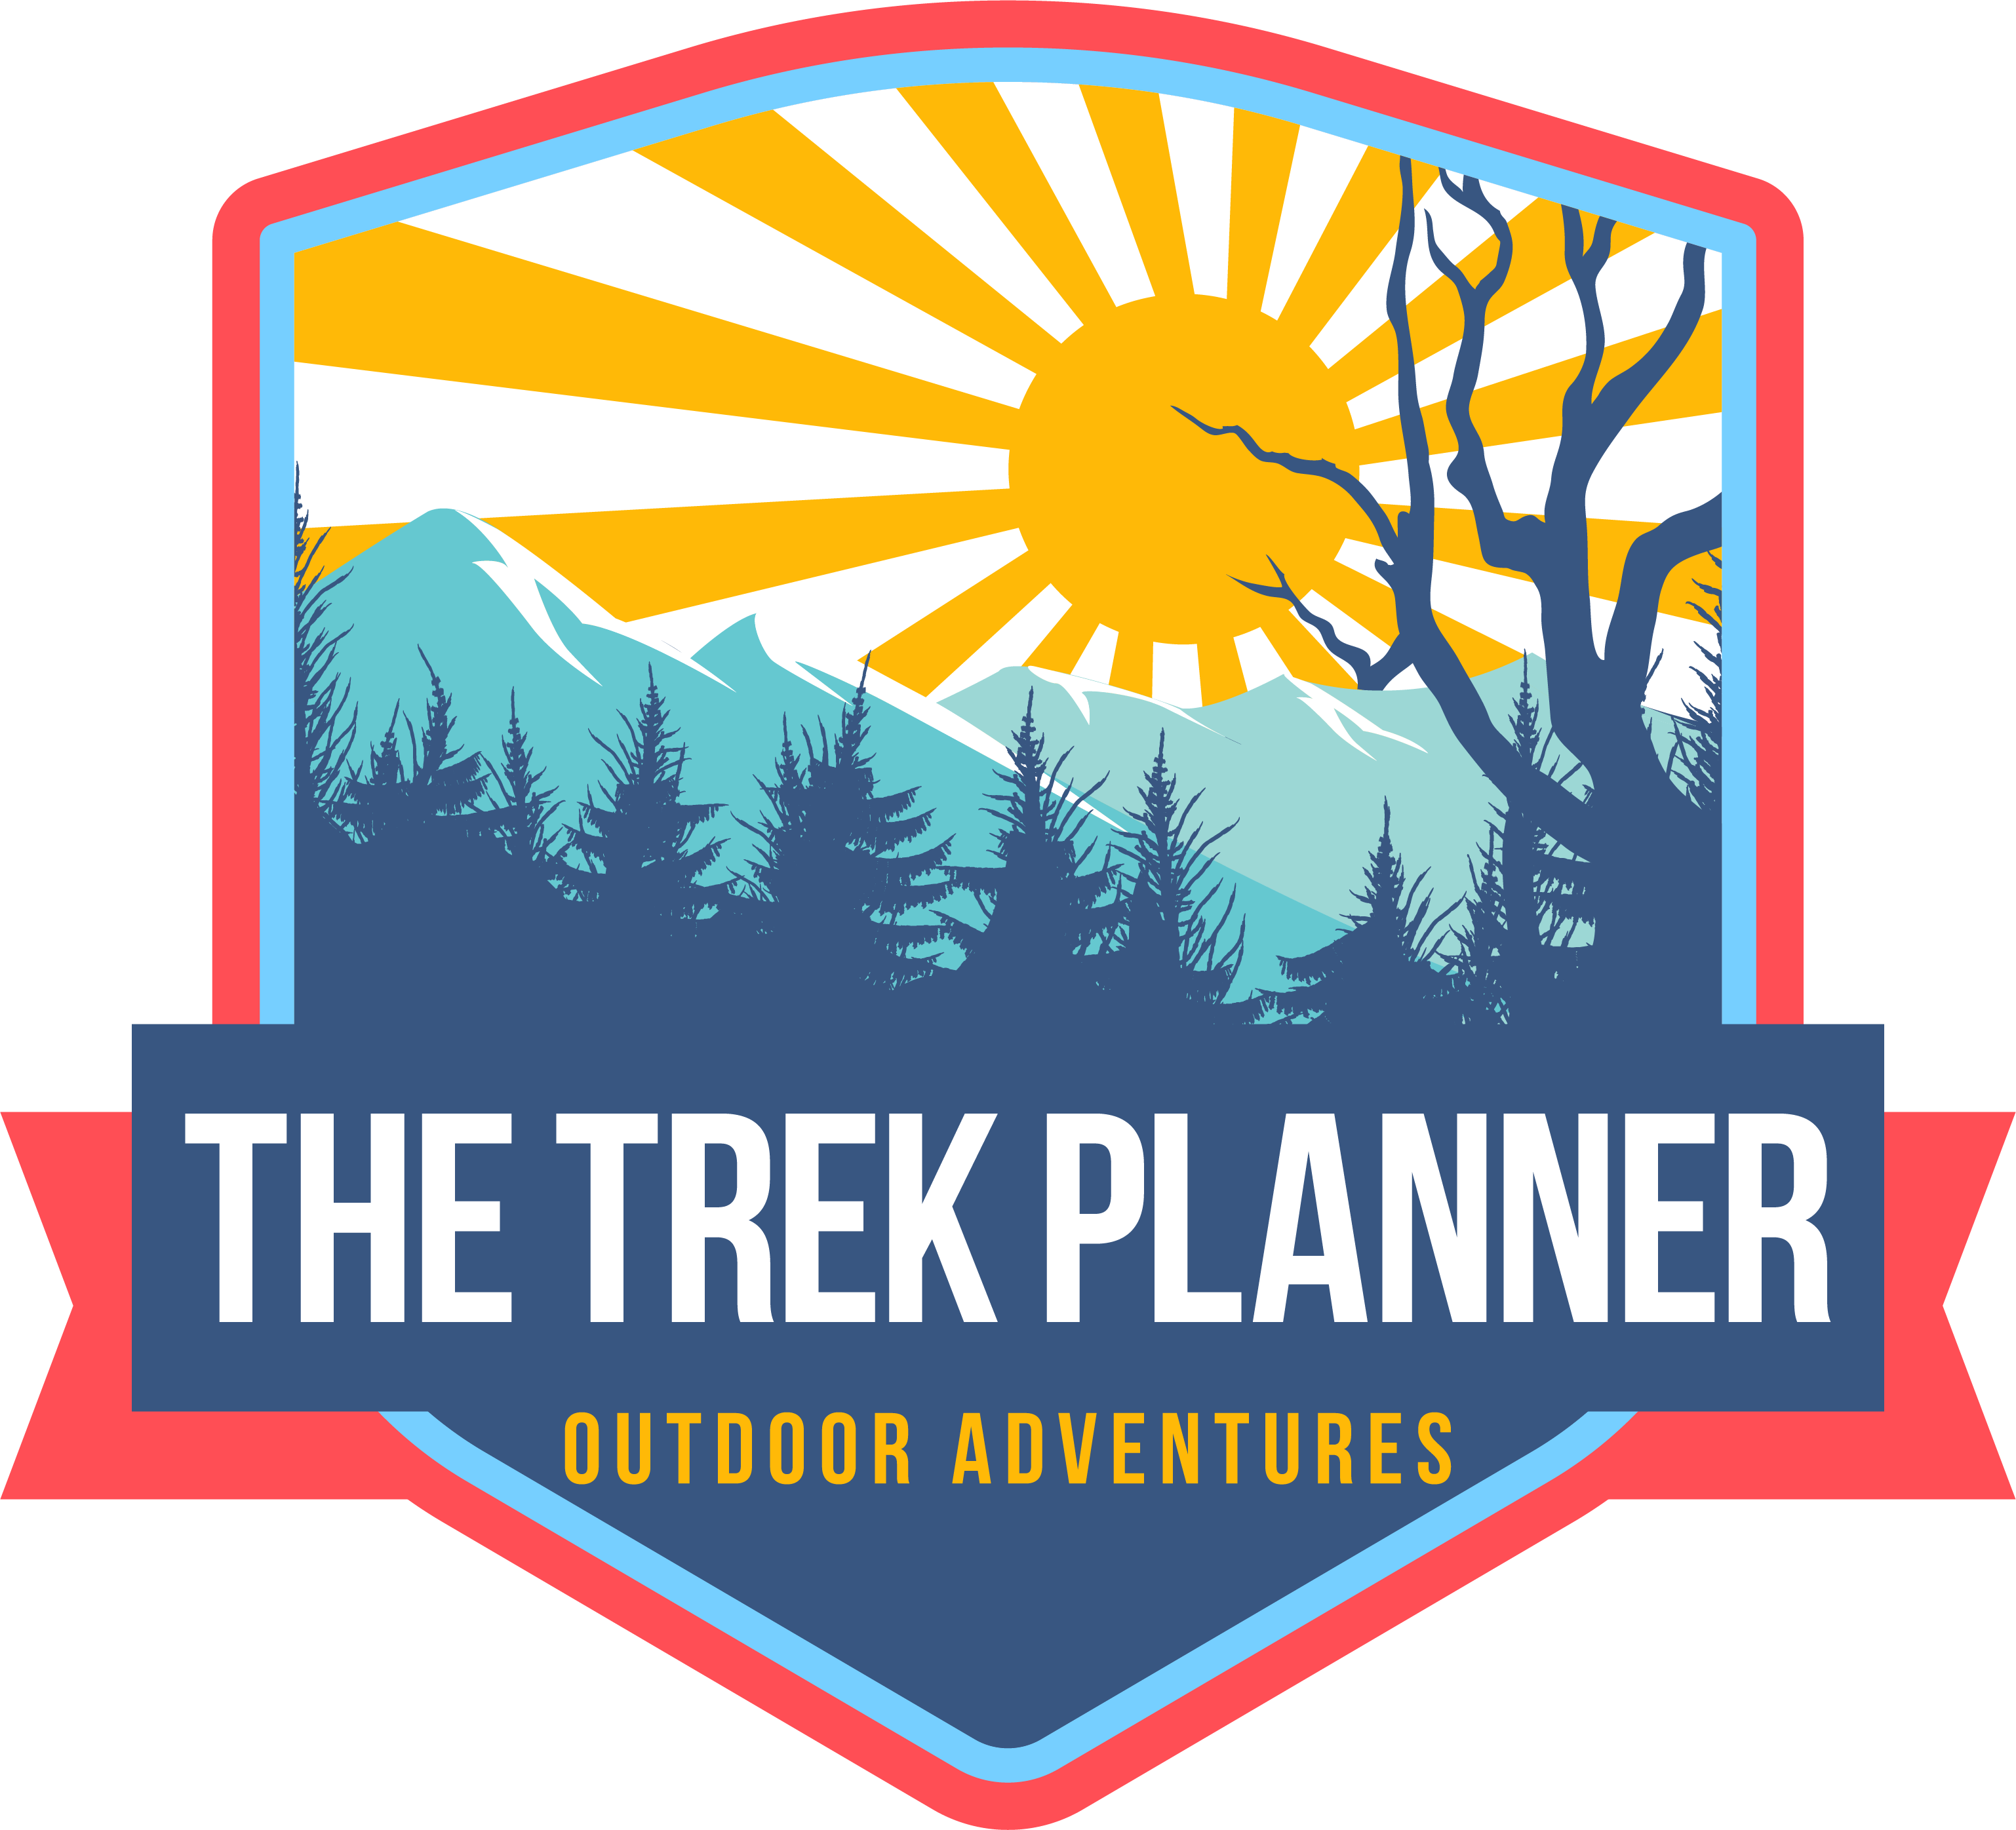 Meet The Trek Planner Team